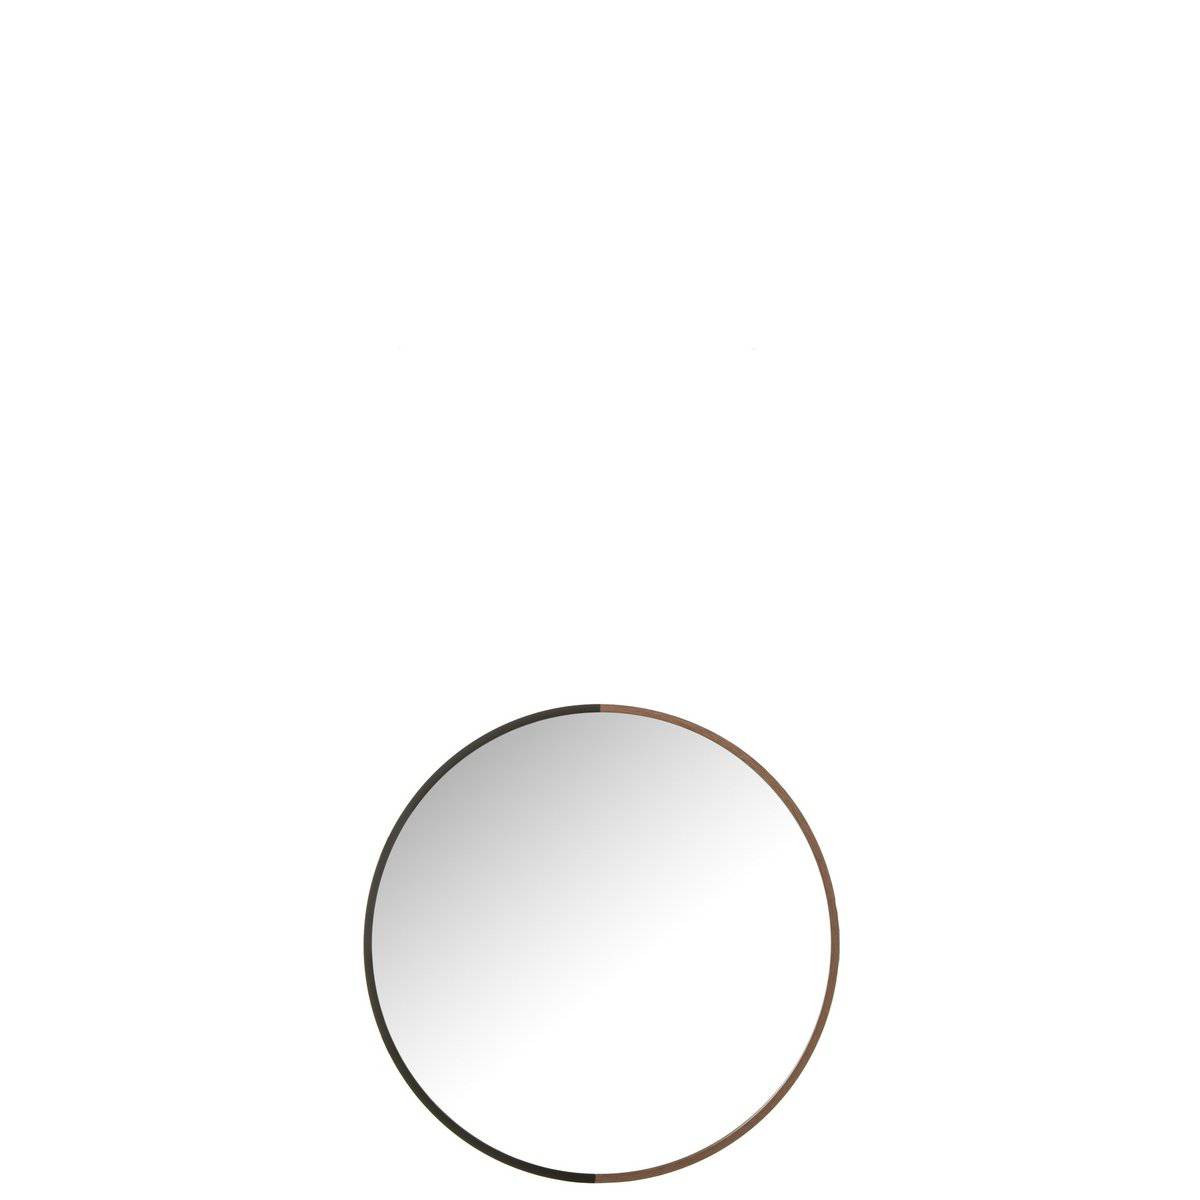 J-Line Mirror Round Metal / Wood Black Small - Wall mirror 40 x 40 cm